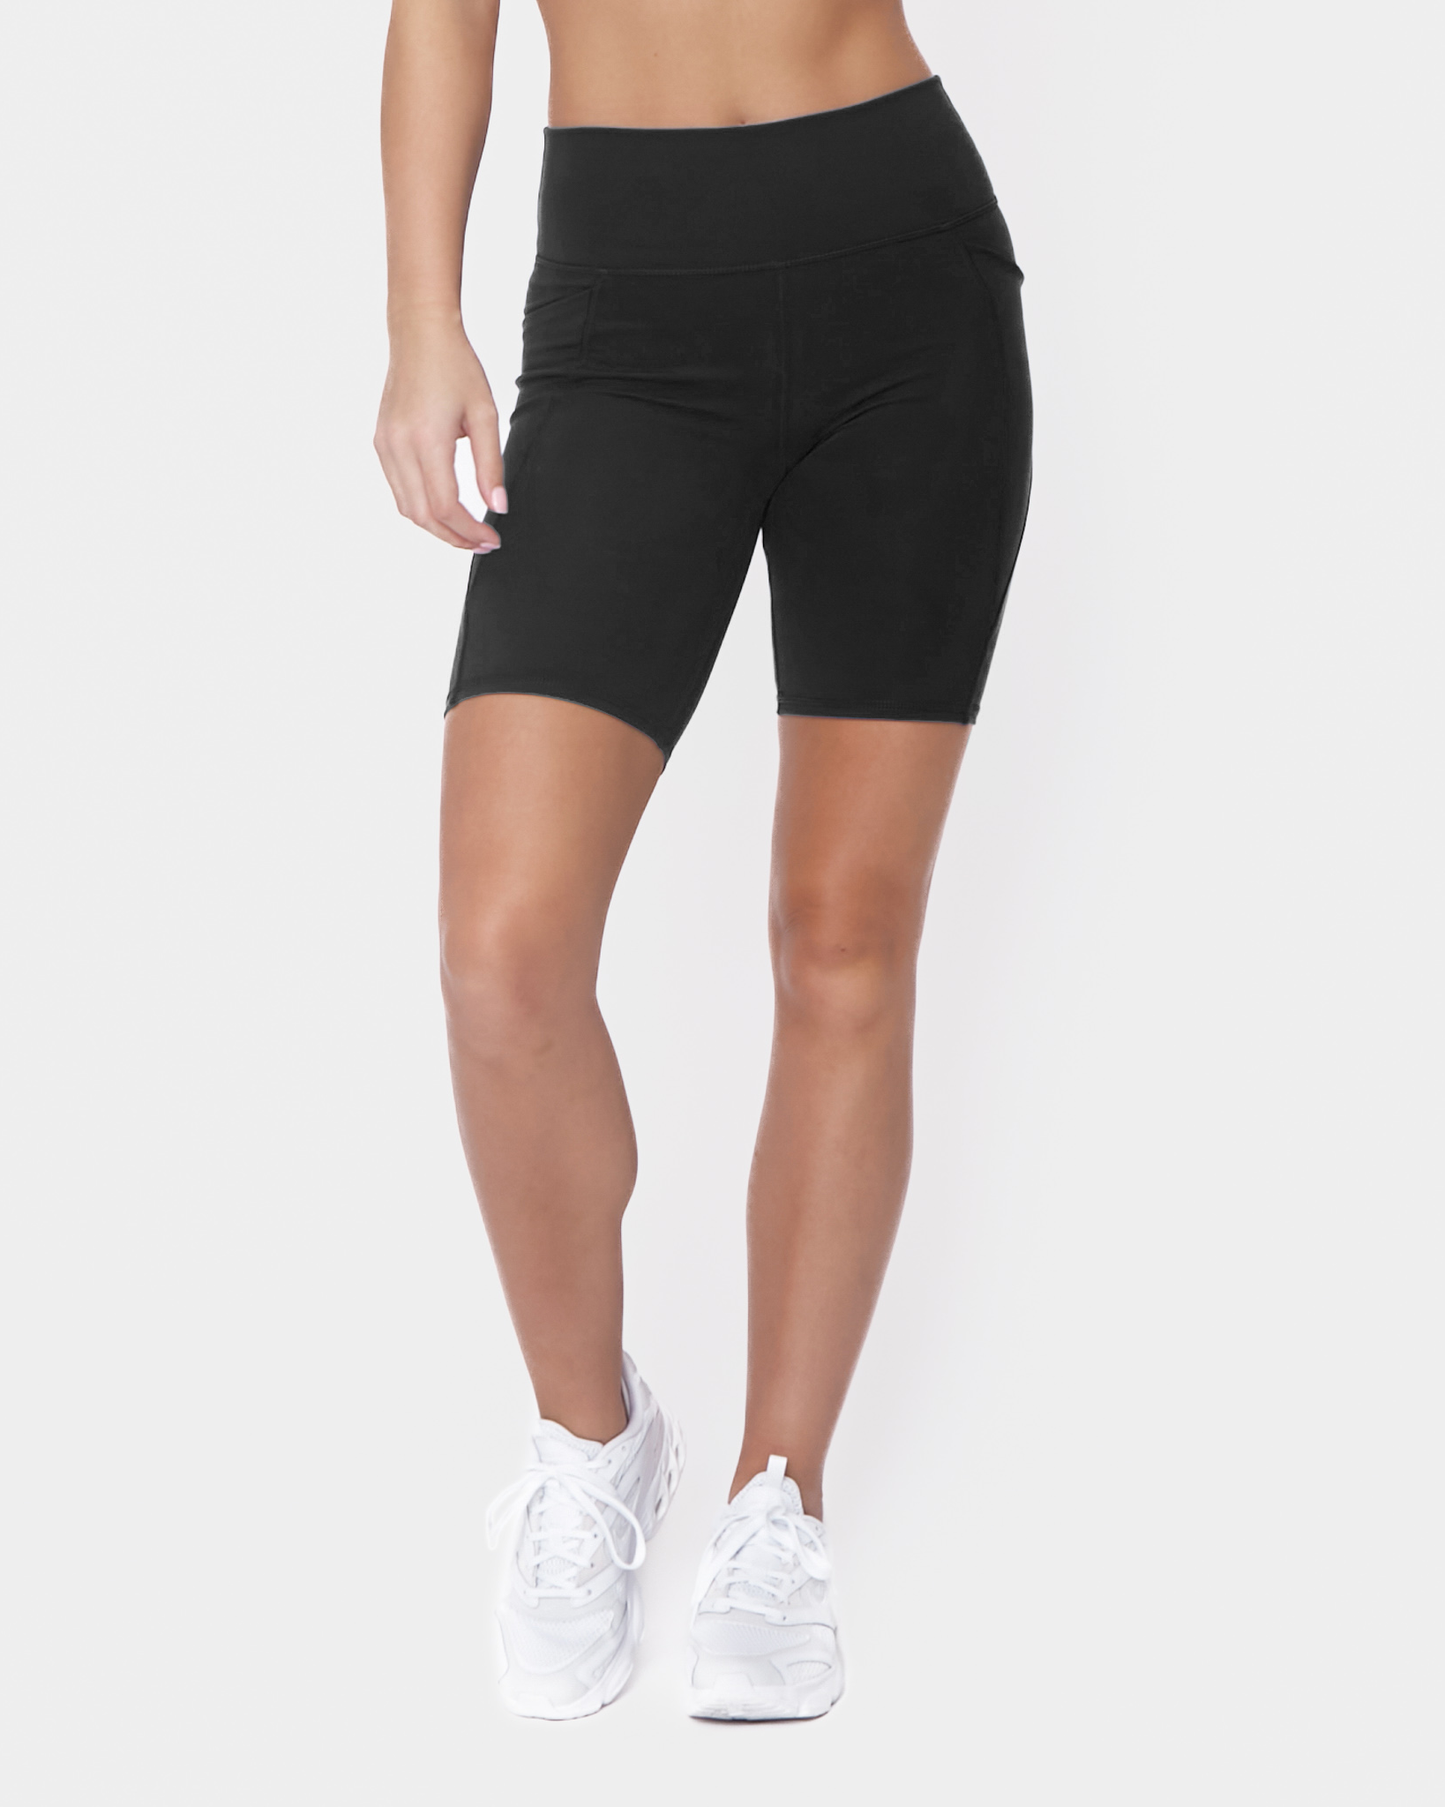 Skin Biker Shorts (8 in. inseam) - Black